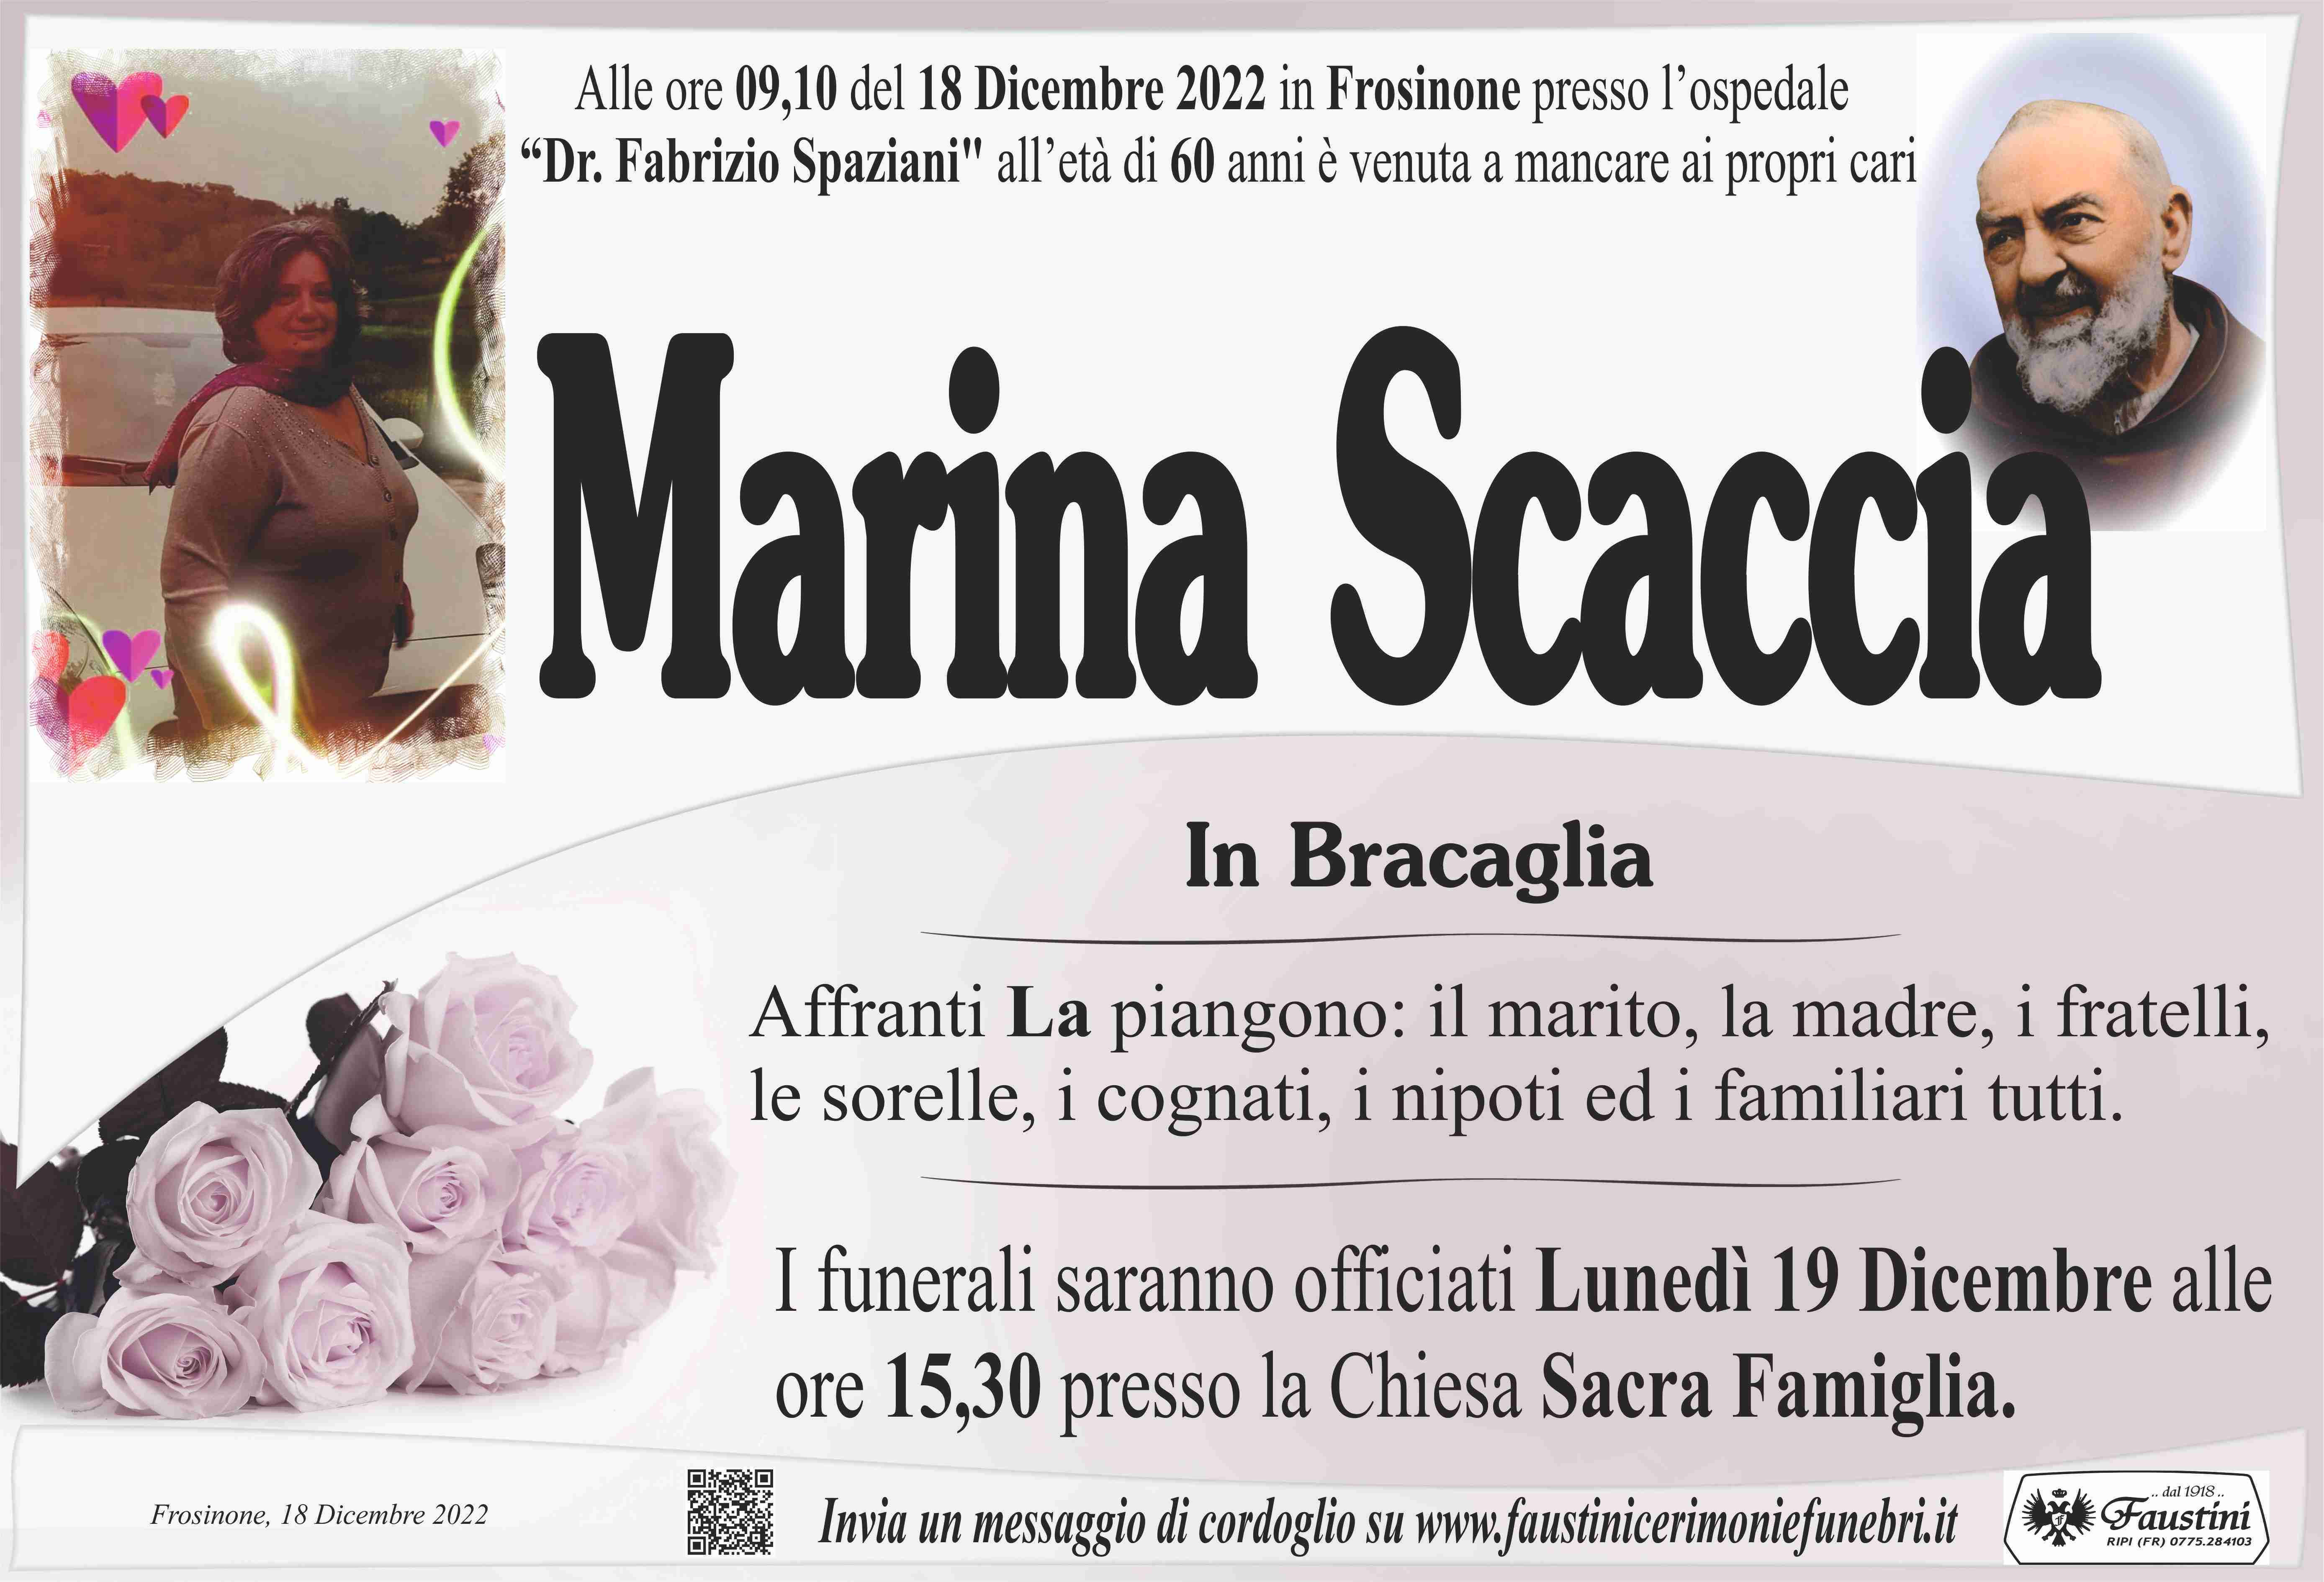 Marina Scaccia